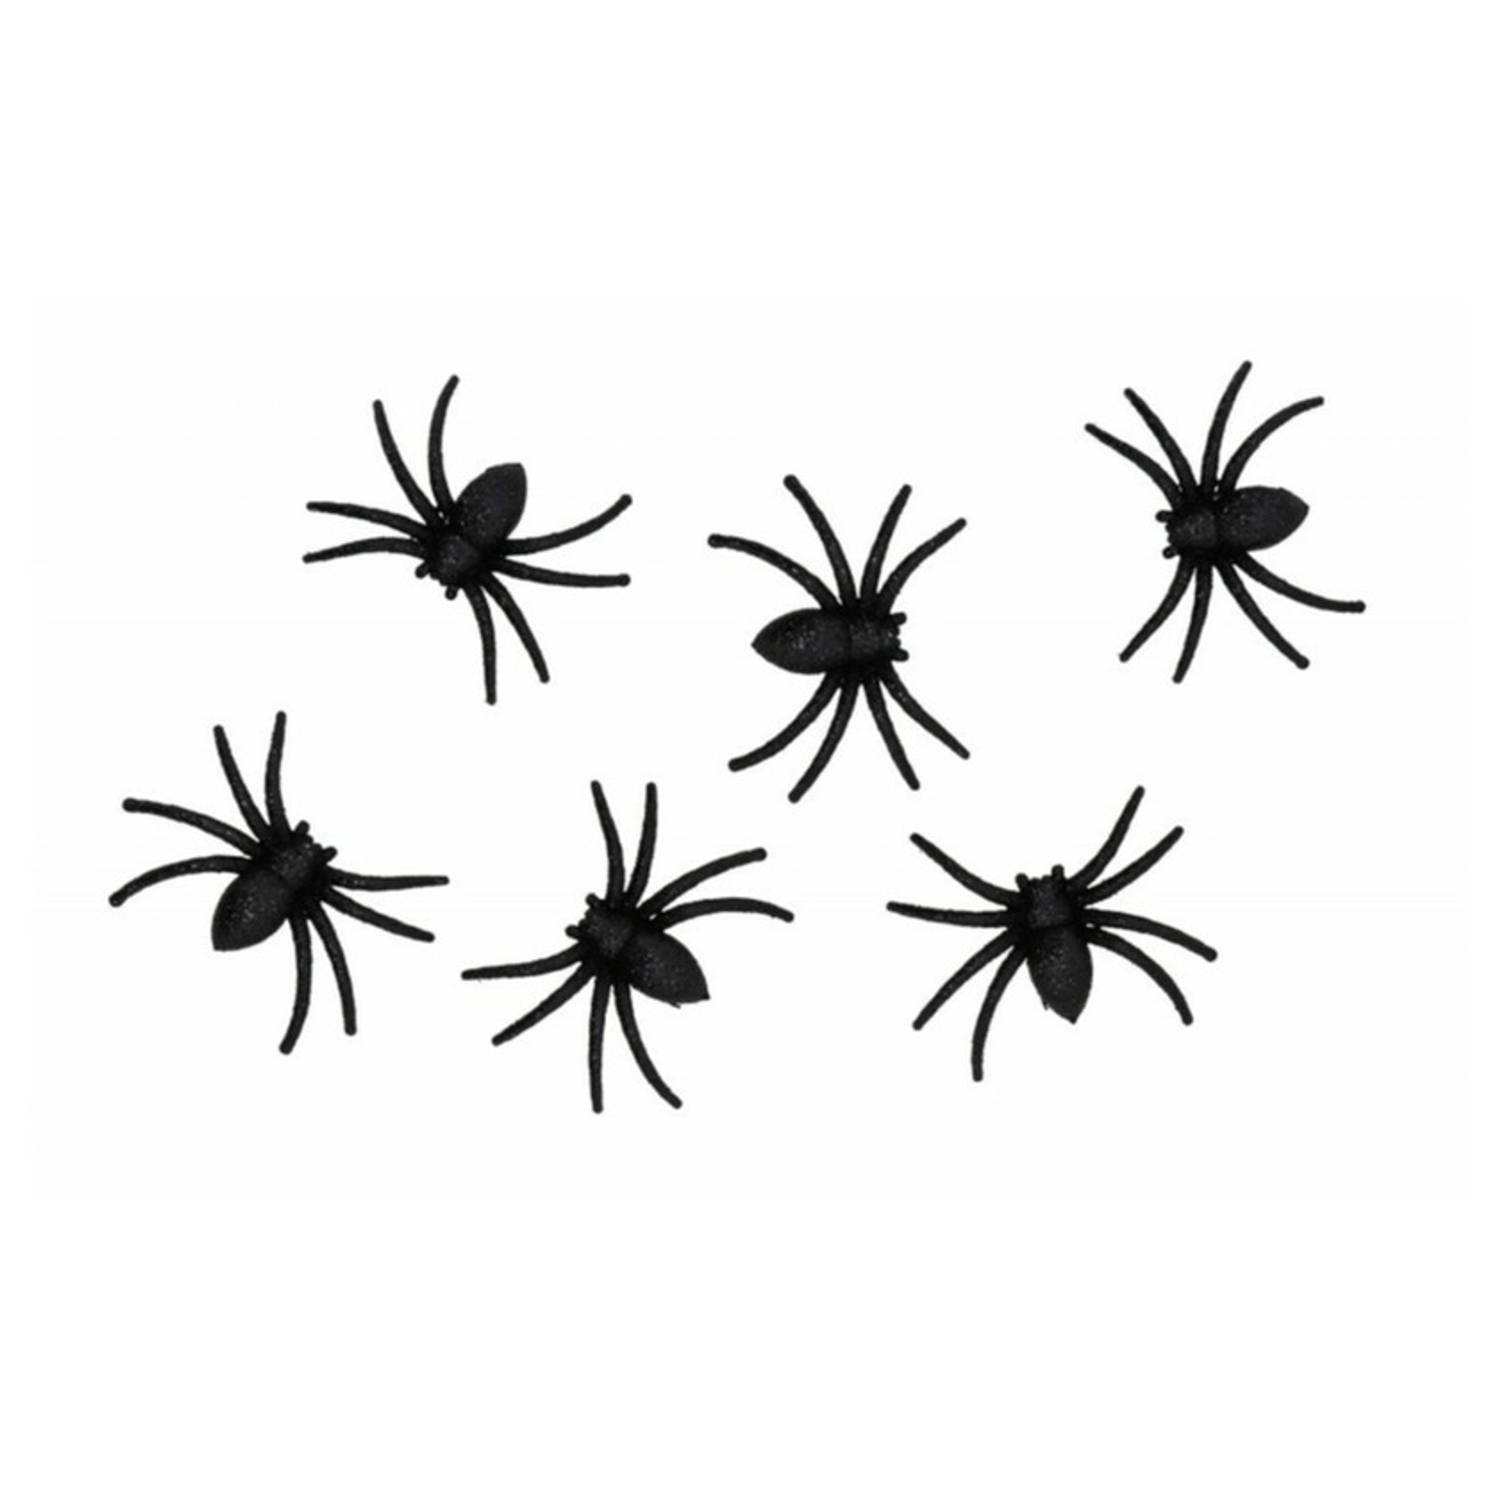 Chaks nep spinnen 8 cm - zwart glitter - 6x stuks - Horror/griezel thema decoratie beestjes